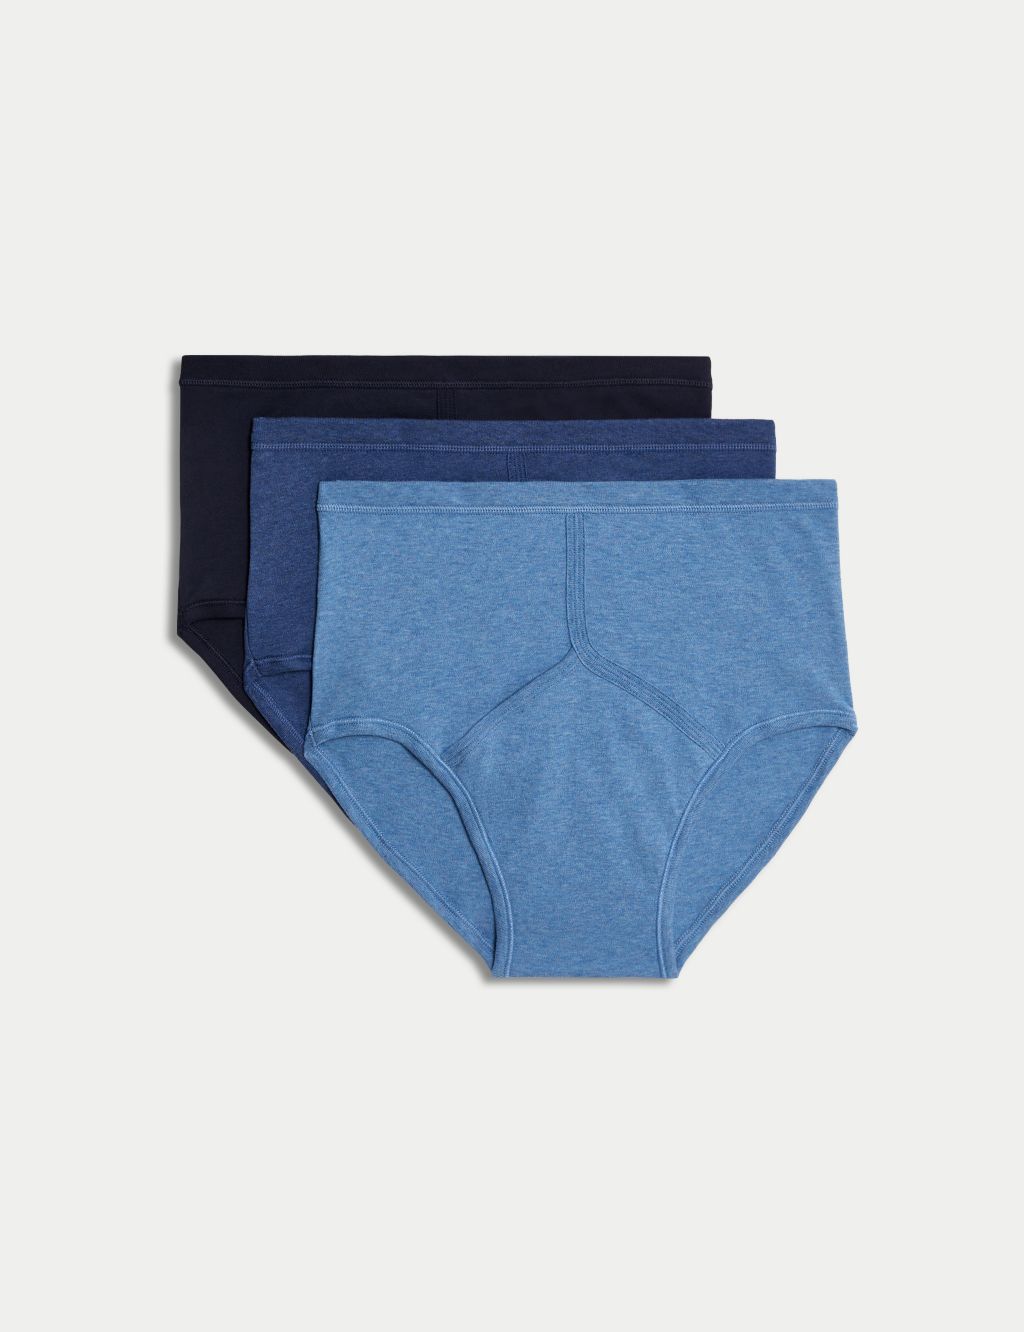 Pure cotton underwear for men